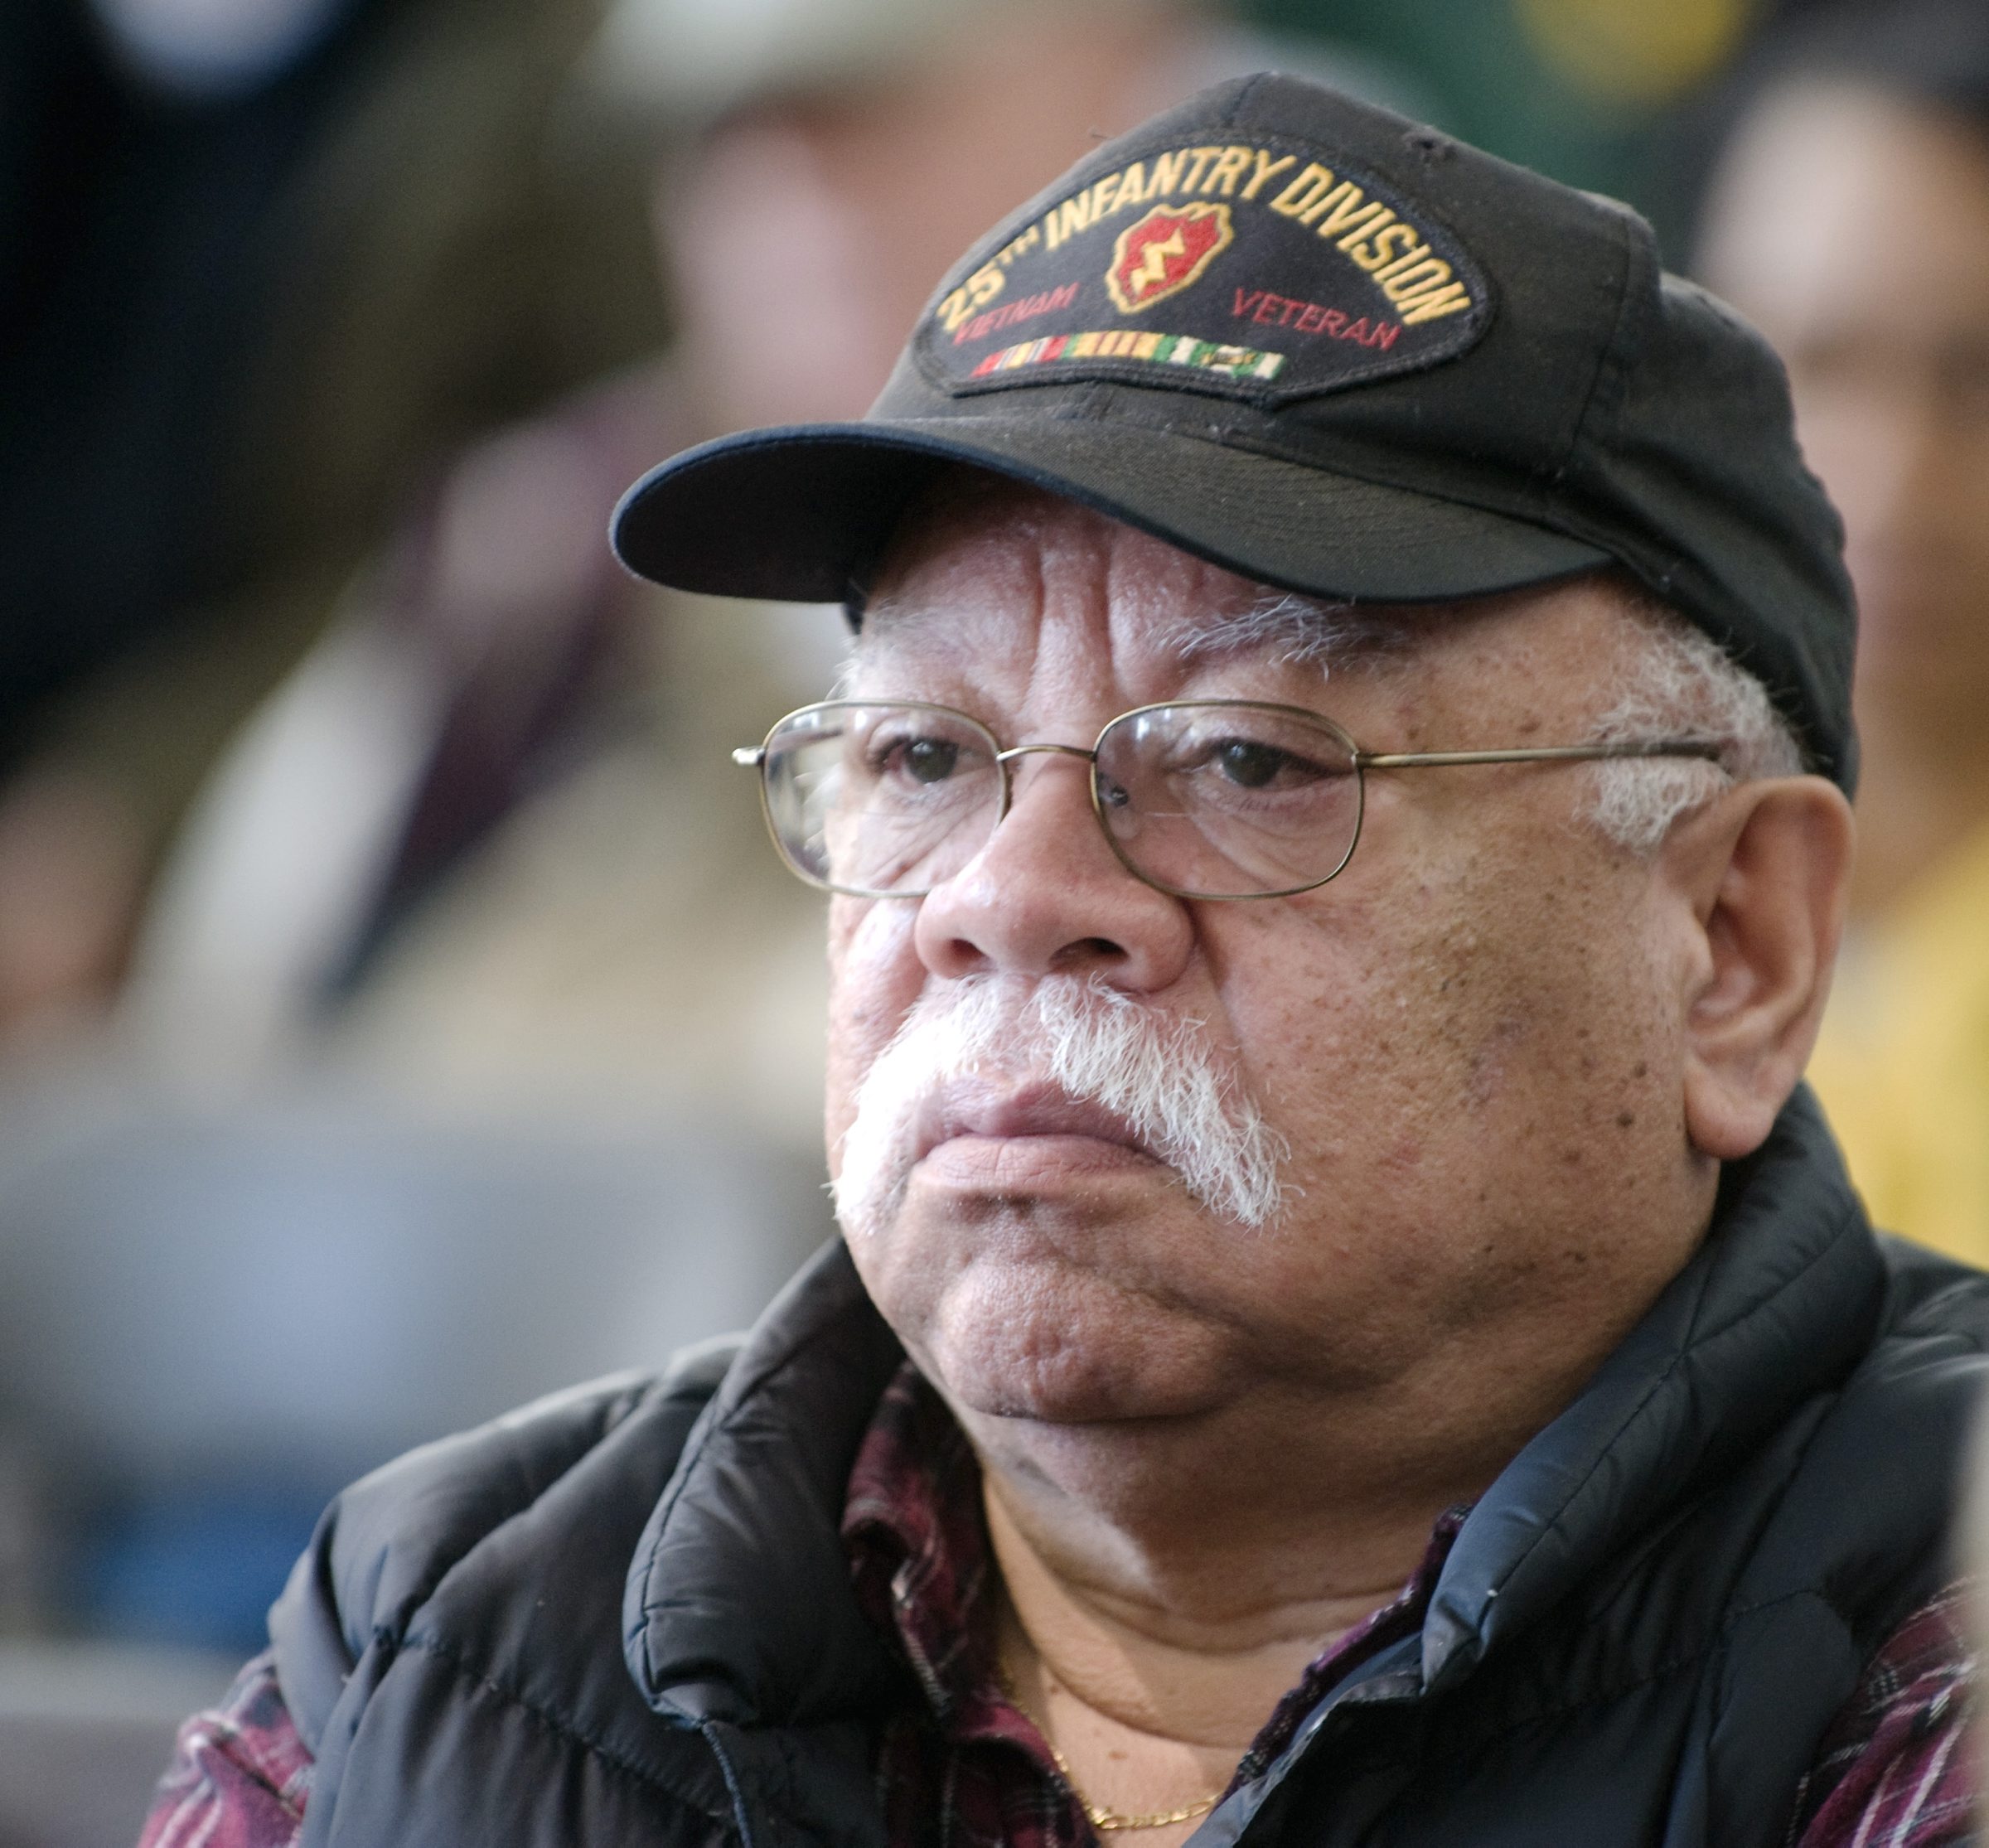 Hugh Reyes, of Uniondale, listened as names of NY Vietnam War dead were read aloud. (Newsday photo) - hugh_reyes